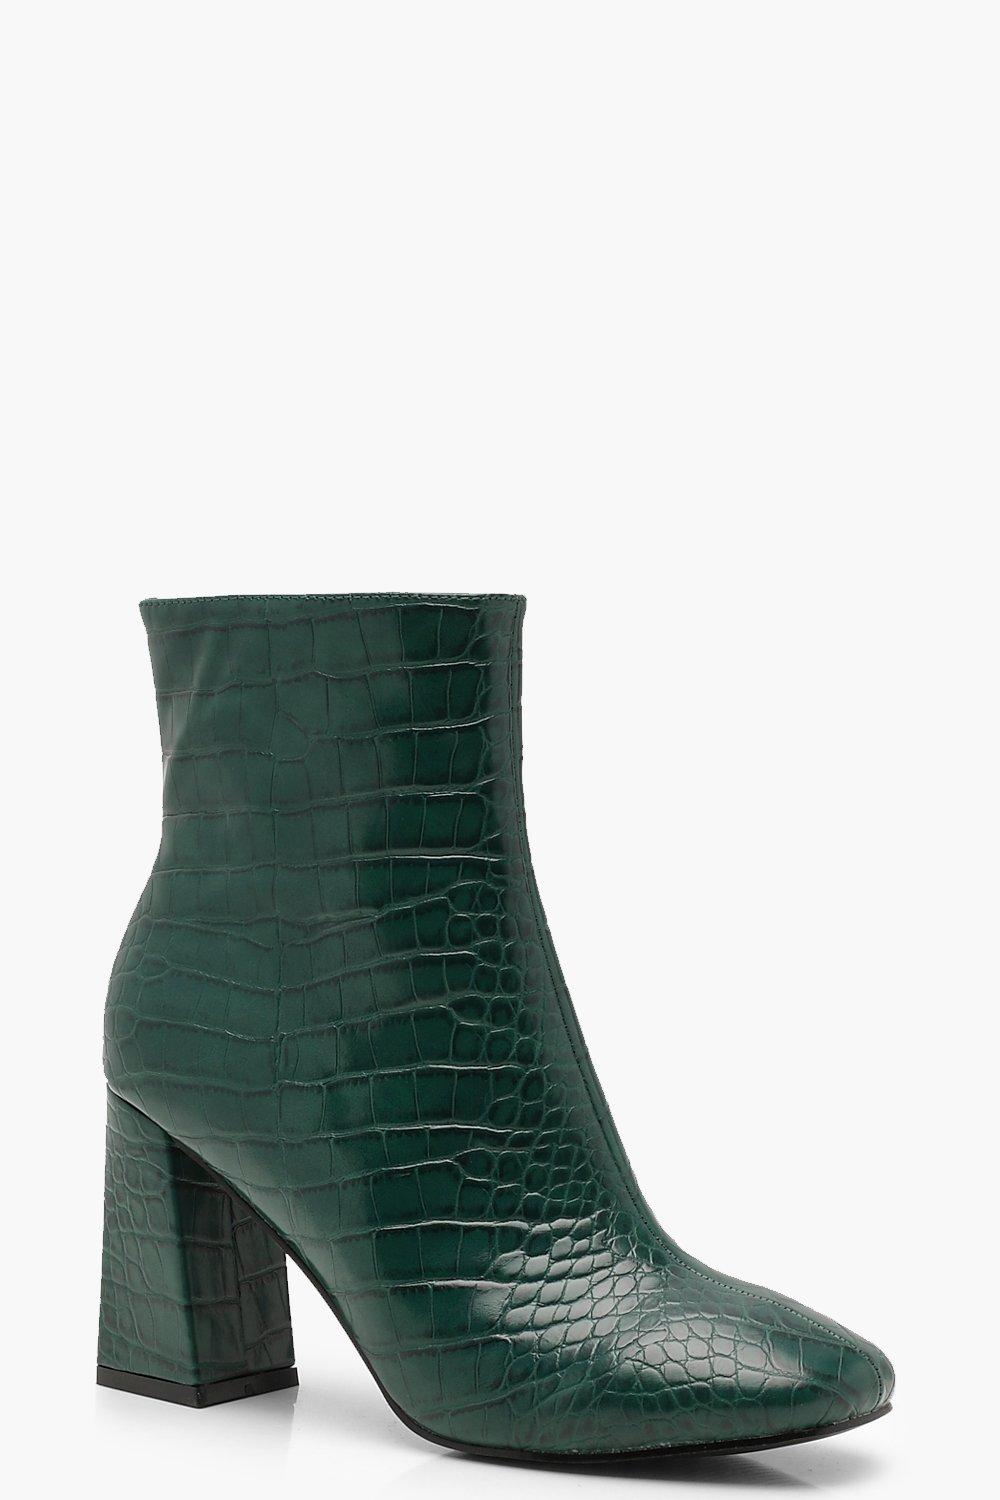 green croc boots